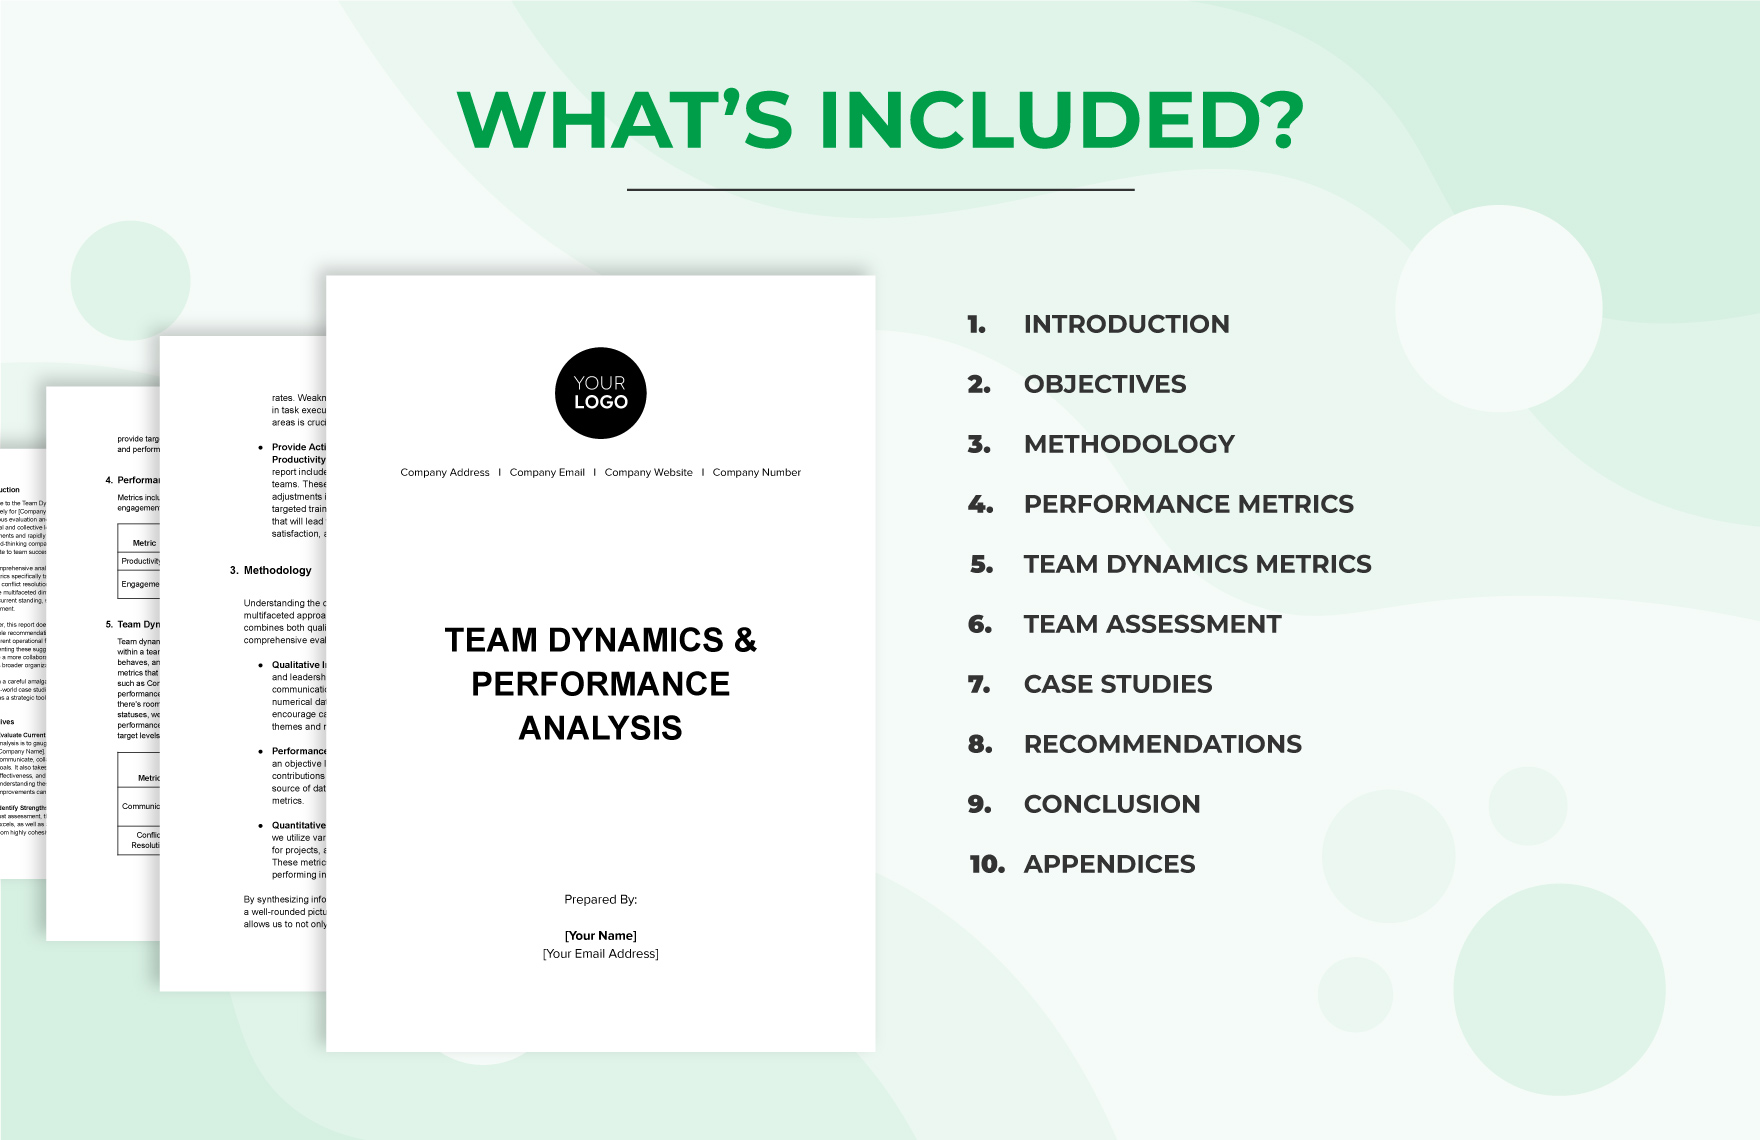 Team Dynamics & Performance Analysis HR Template